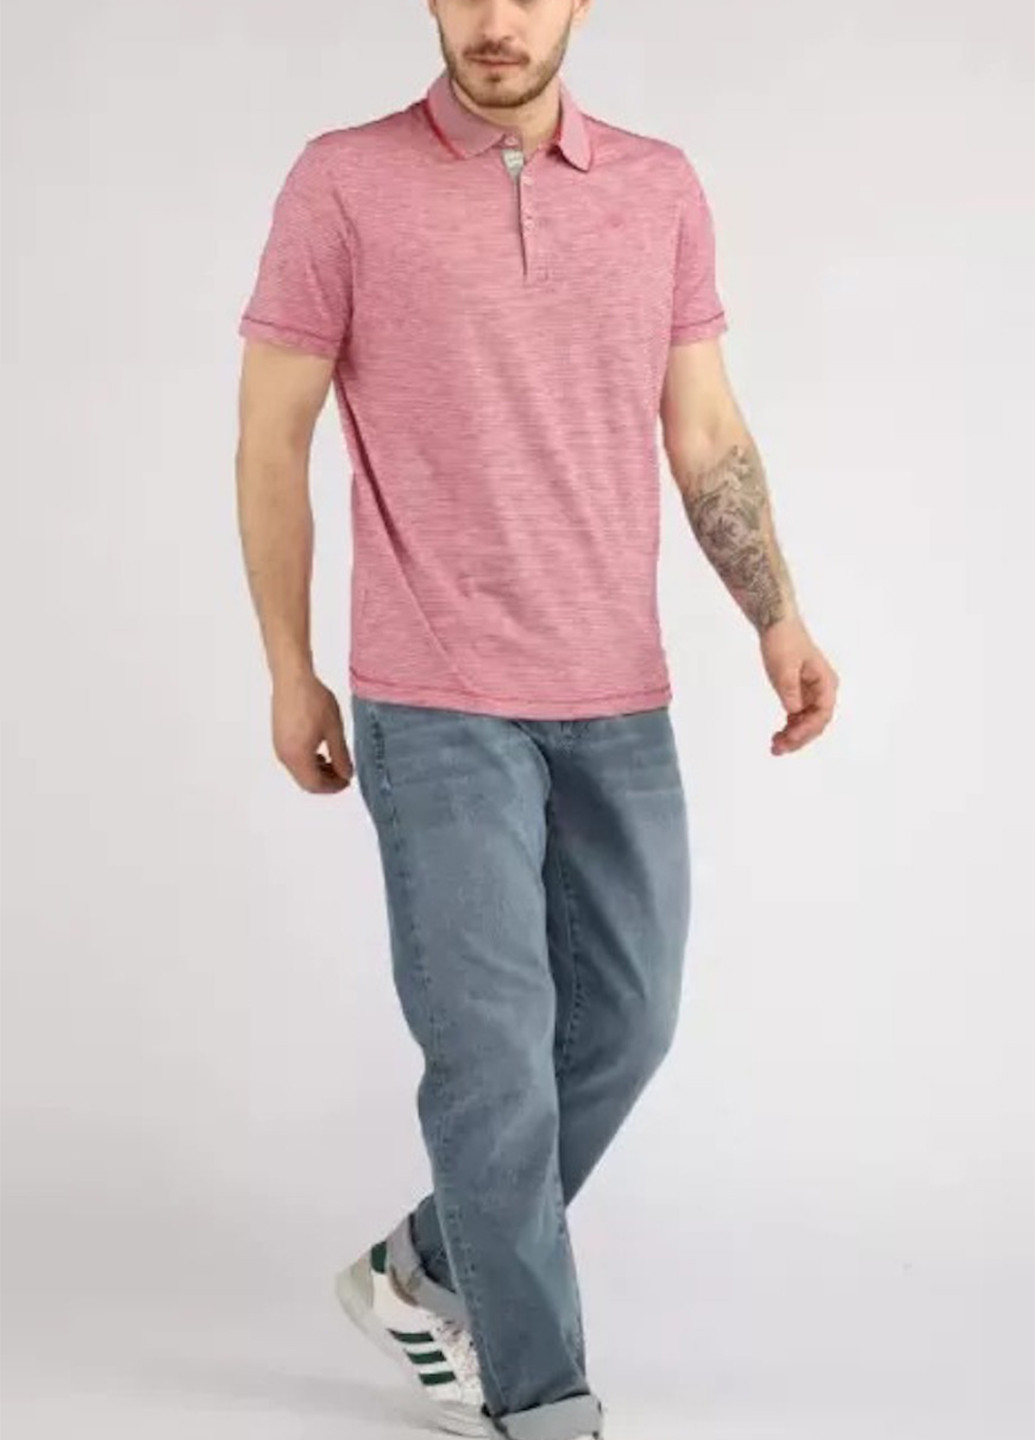 Розовая футболка-поло для мужчин Lerros меланжевая